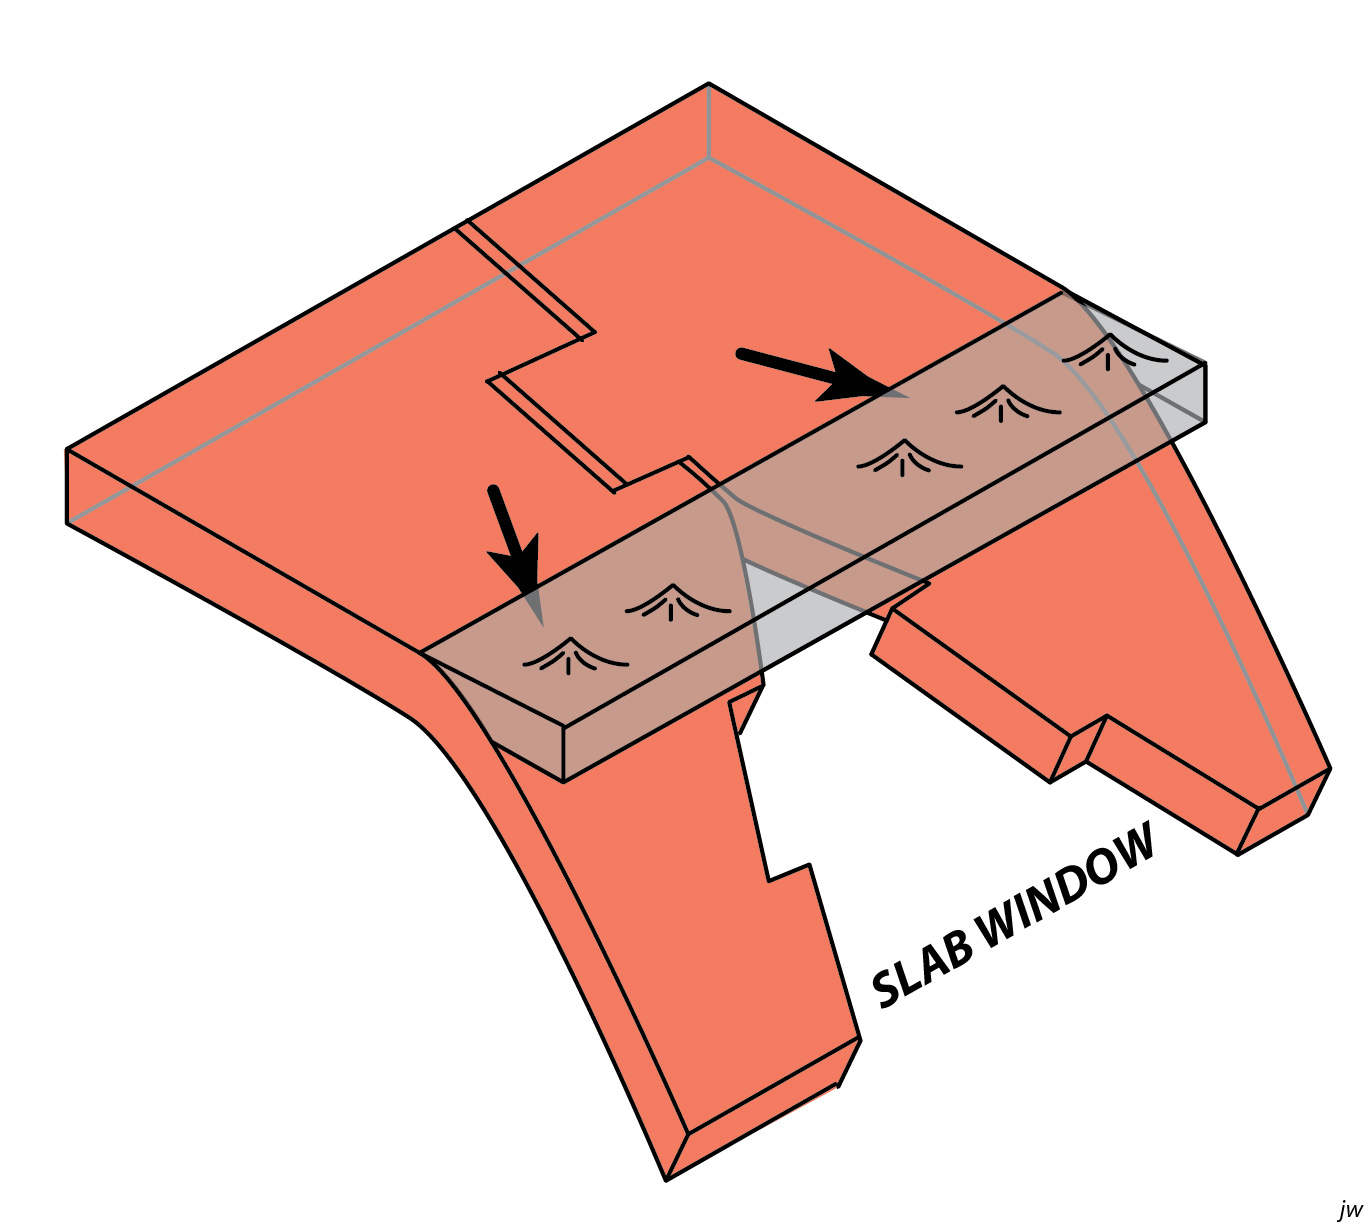 slab window